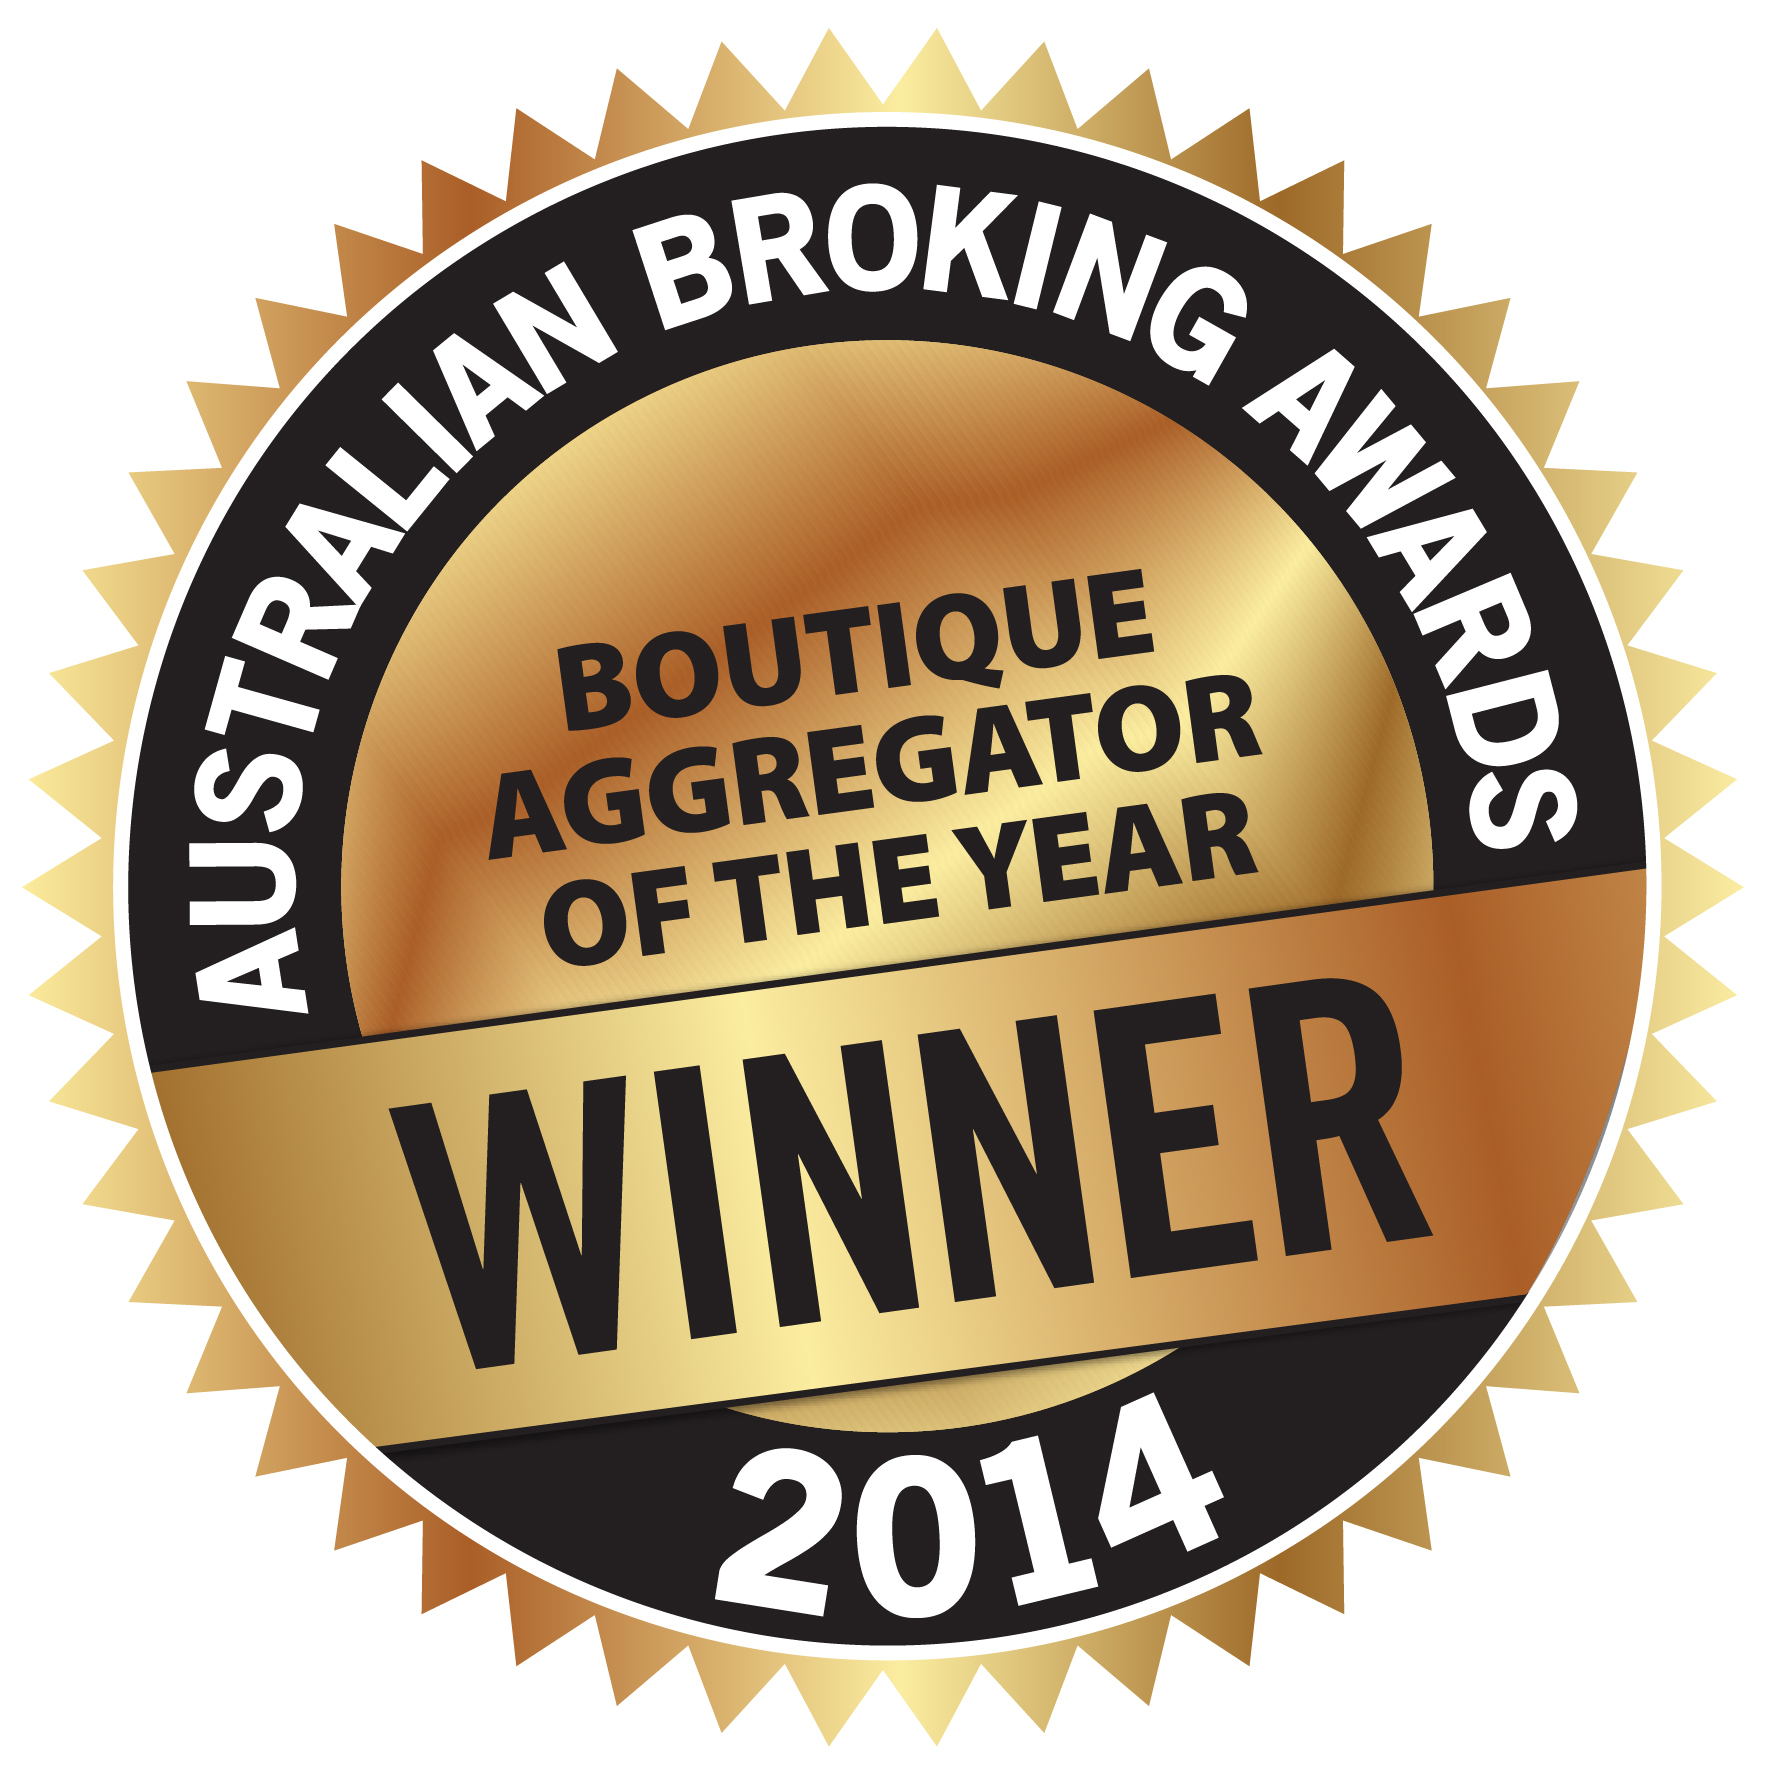 Winner - Boutique Aggregator of the Year Australian Broking Awards 2014